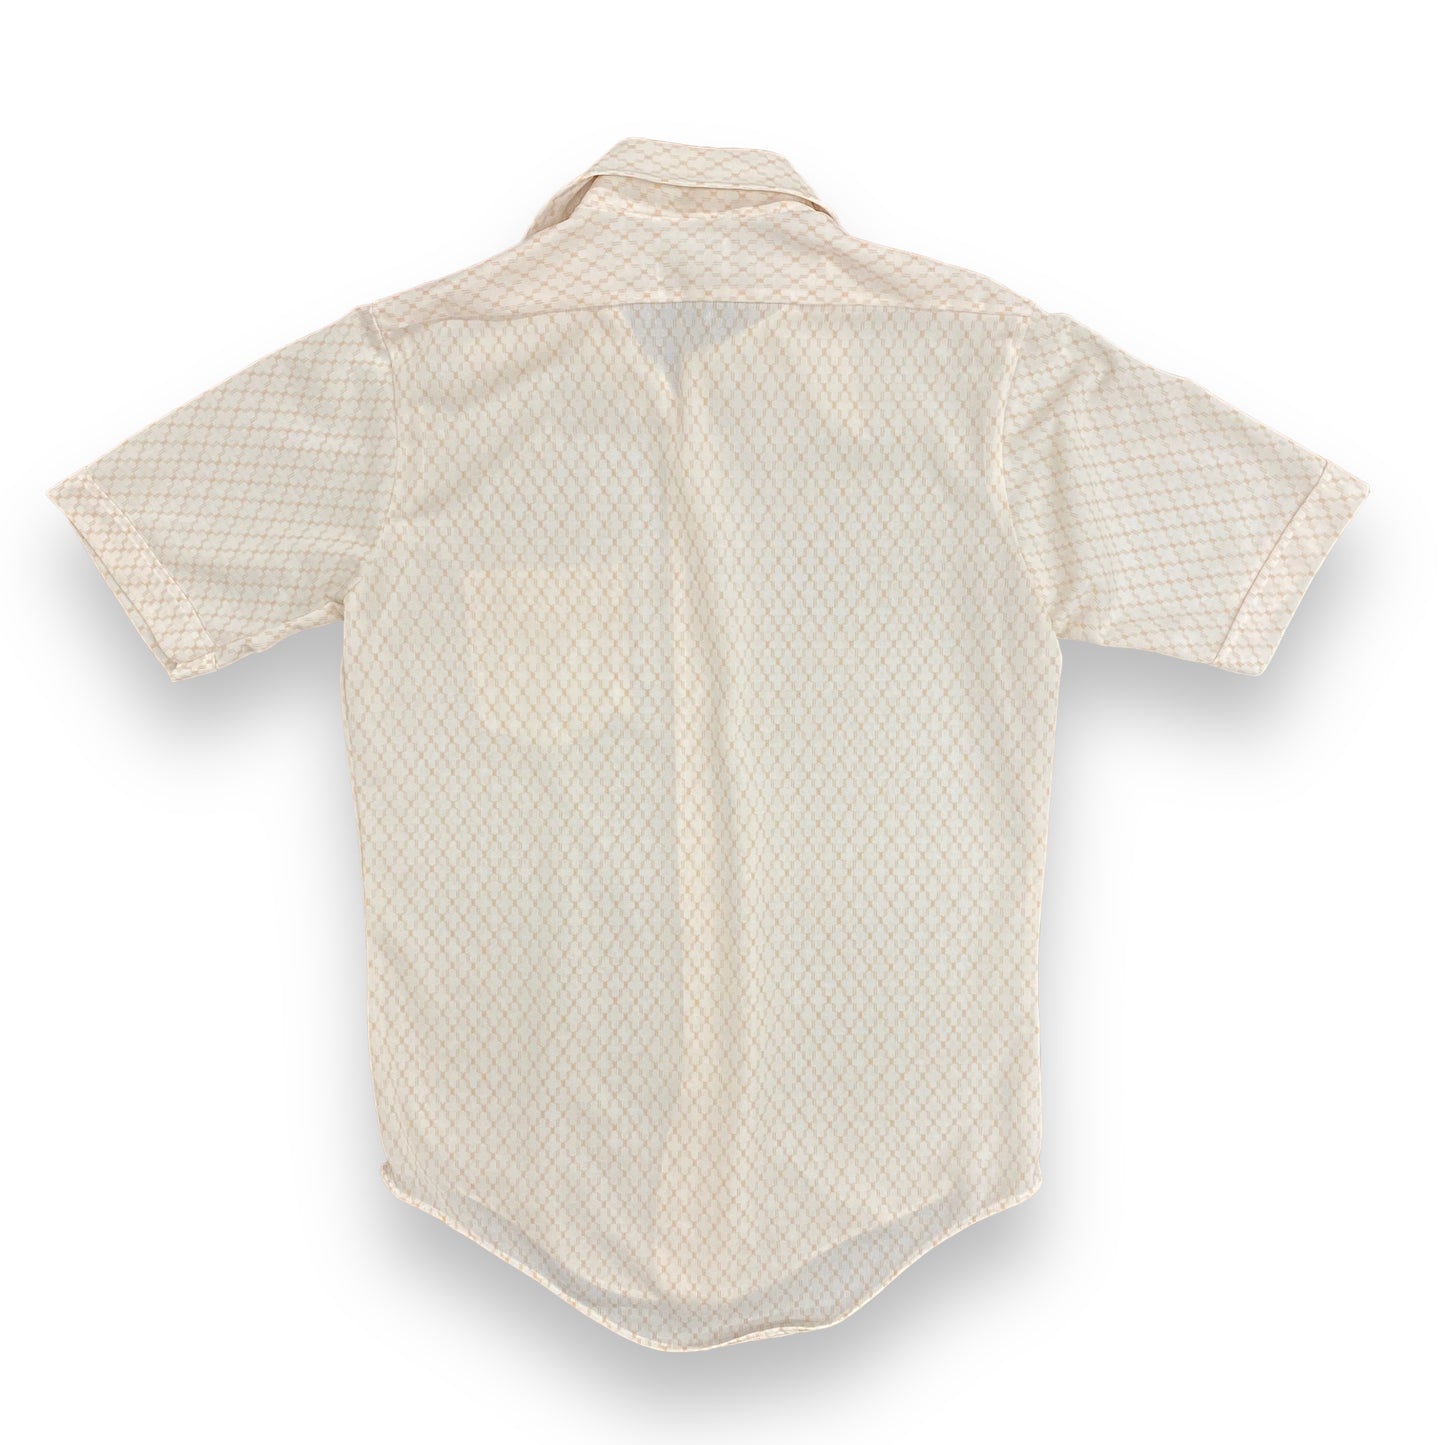 Vintage 1970s KMart Orange & White Shirt Sleeve Button Up - Size Medium